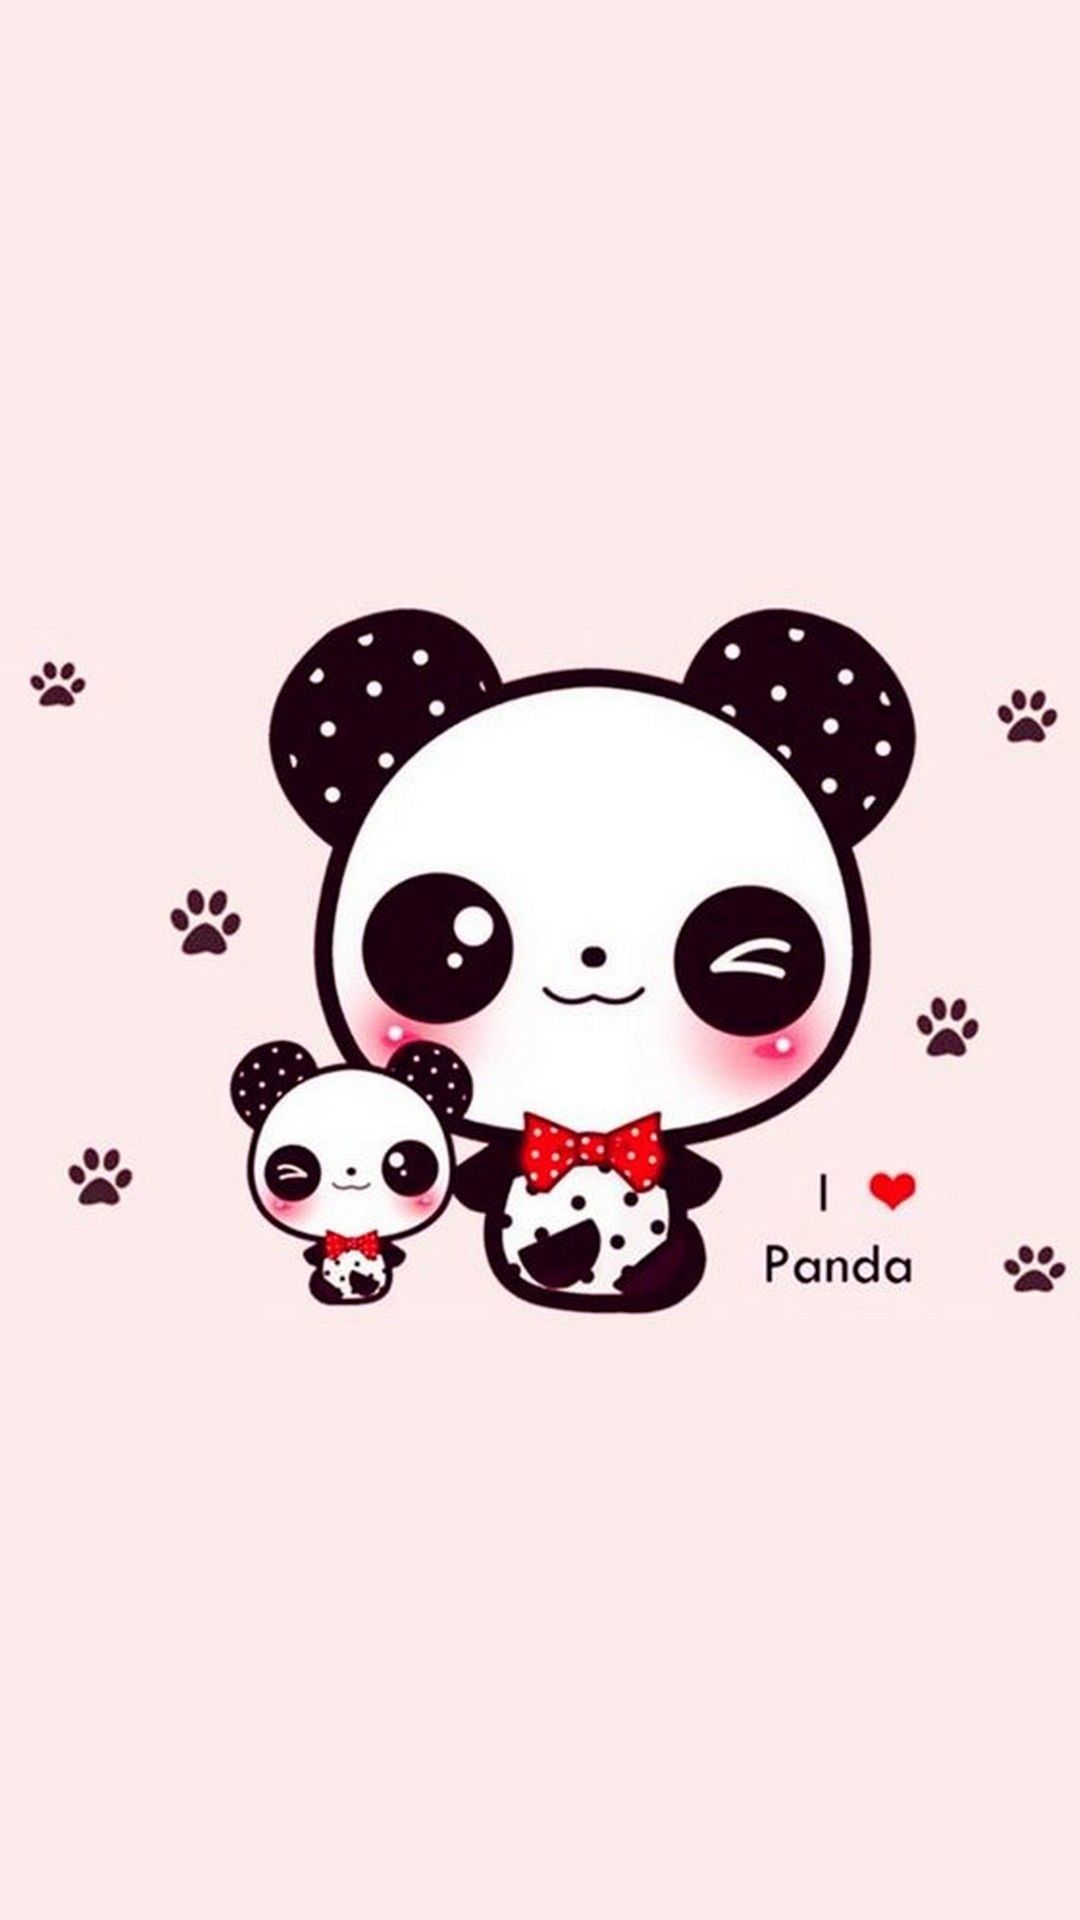 Panda Wallpaper Images, HD Pictures For Free Vectors Download - Lovepik.com